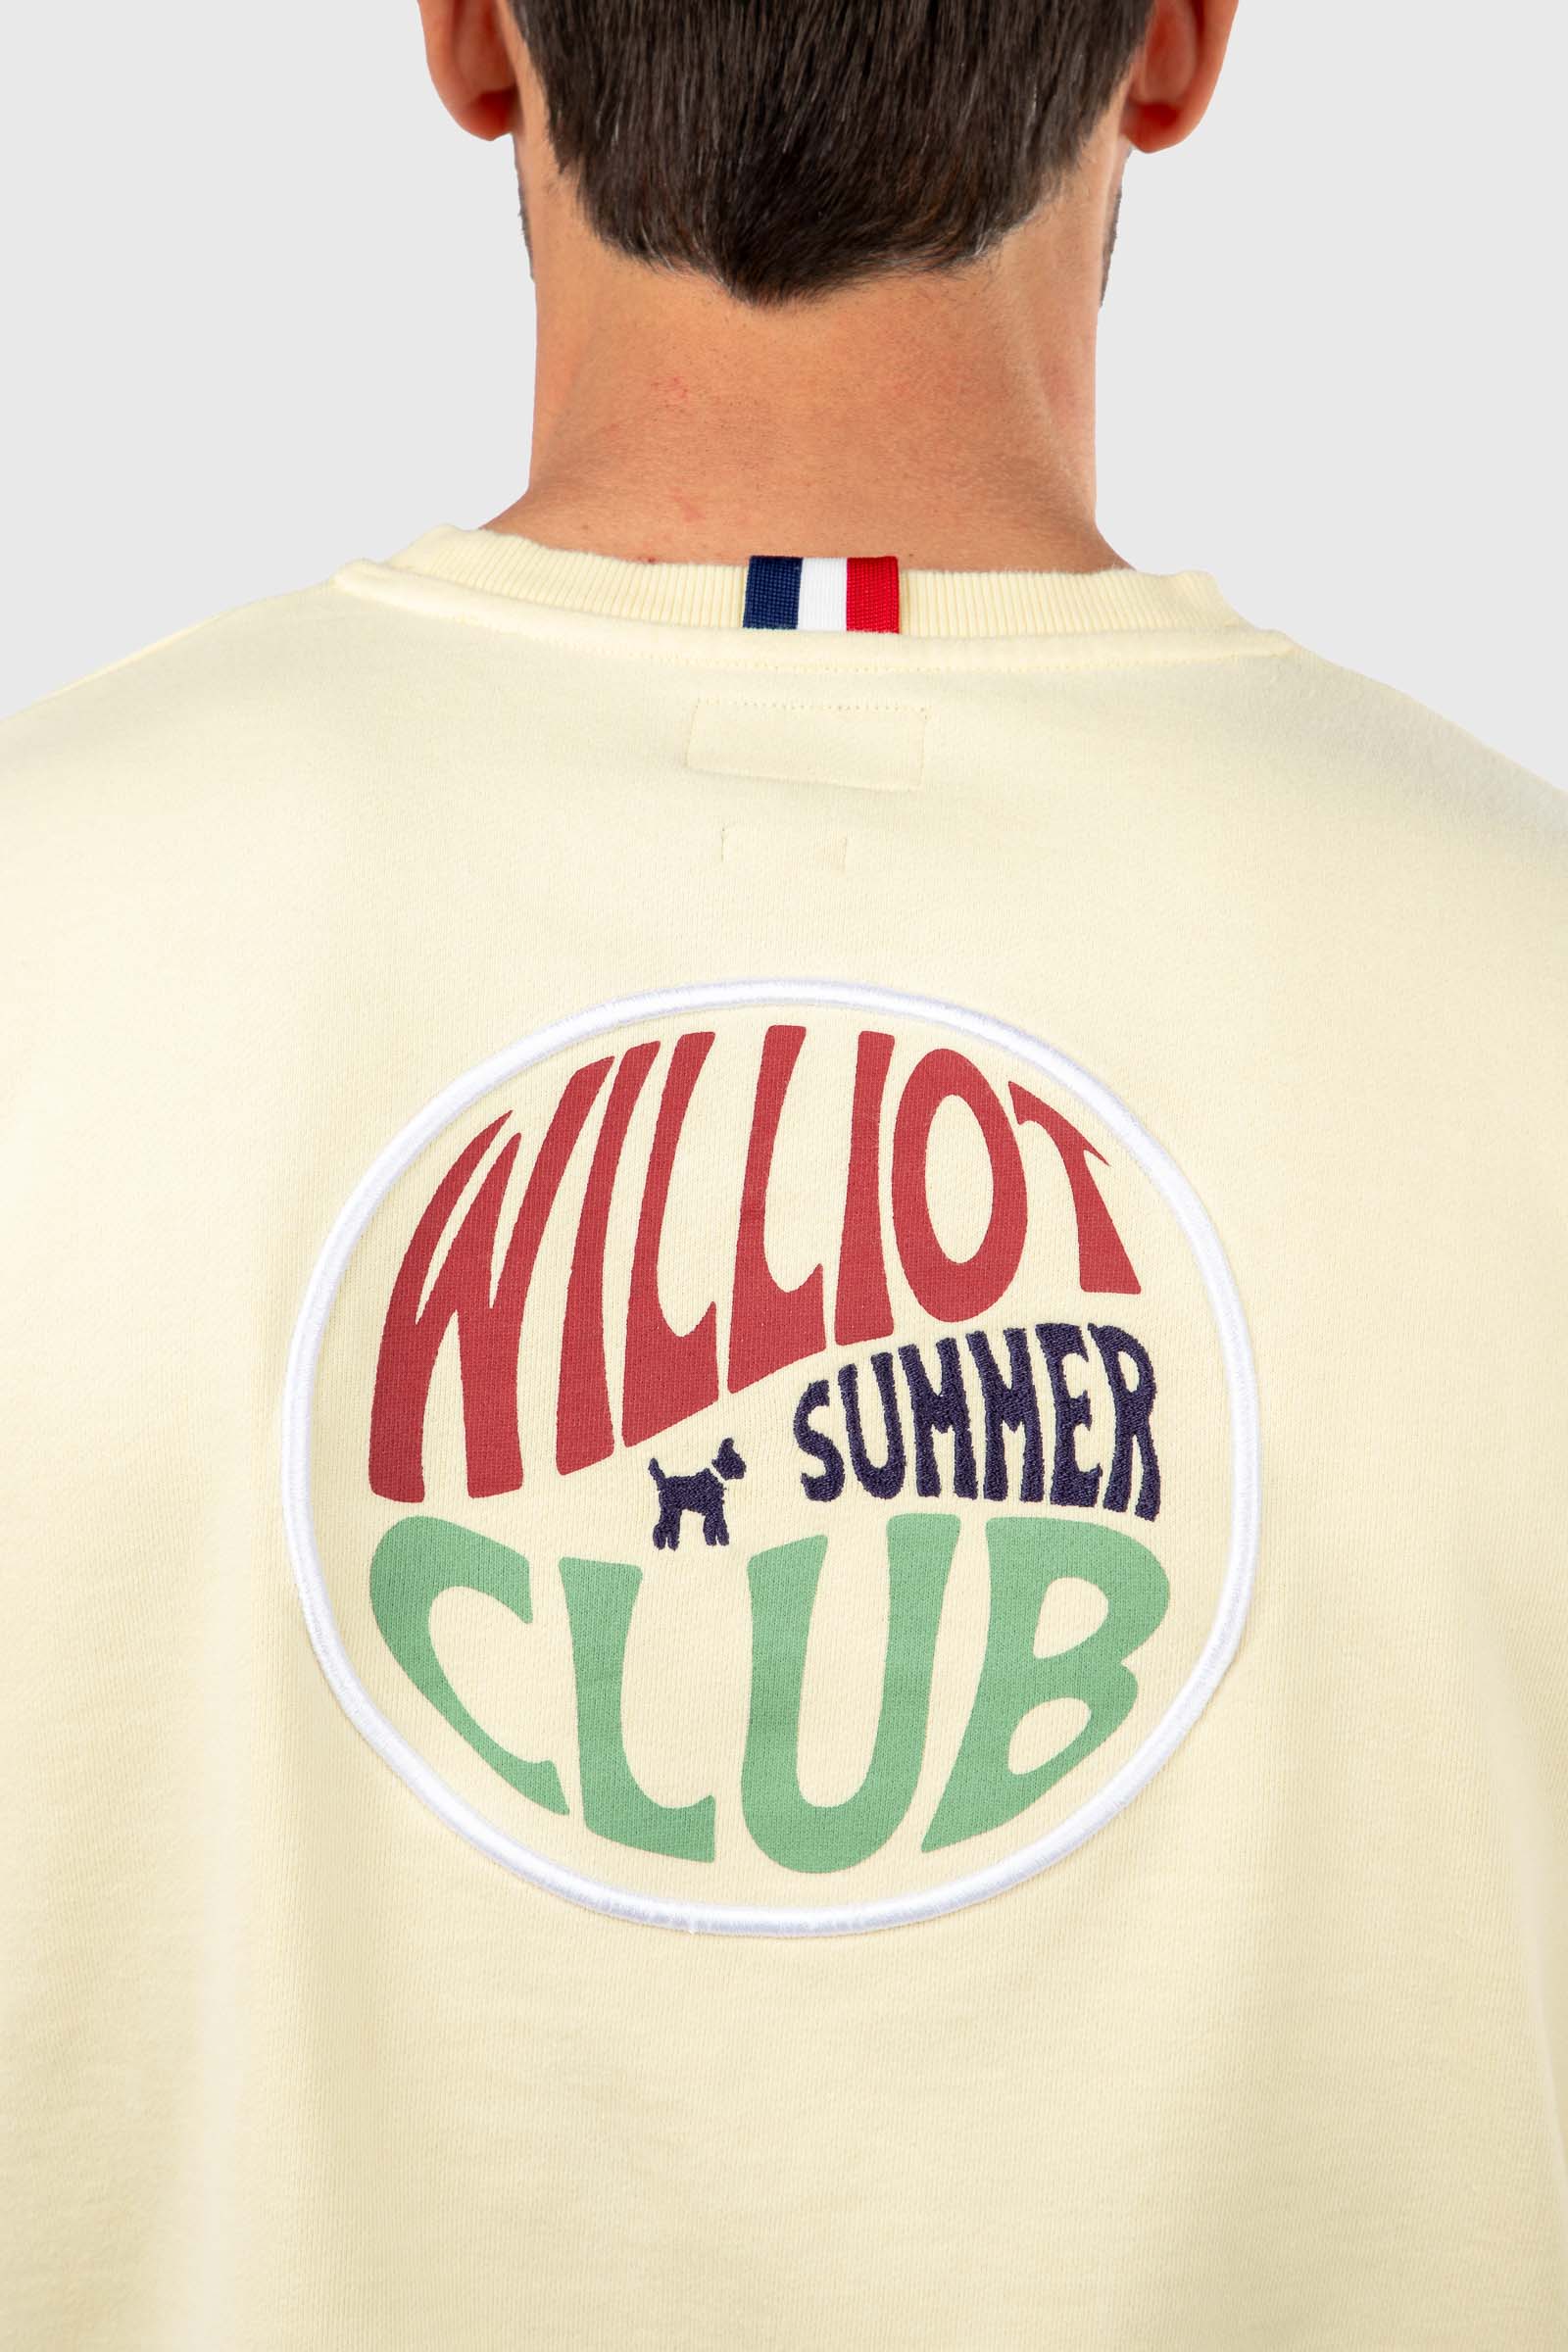 Sudadera Williot Summer Club Amarillo Pastel